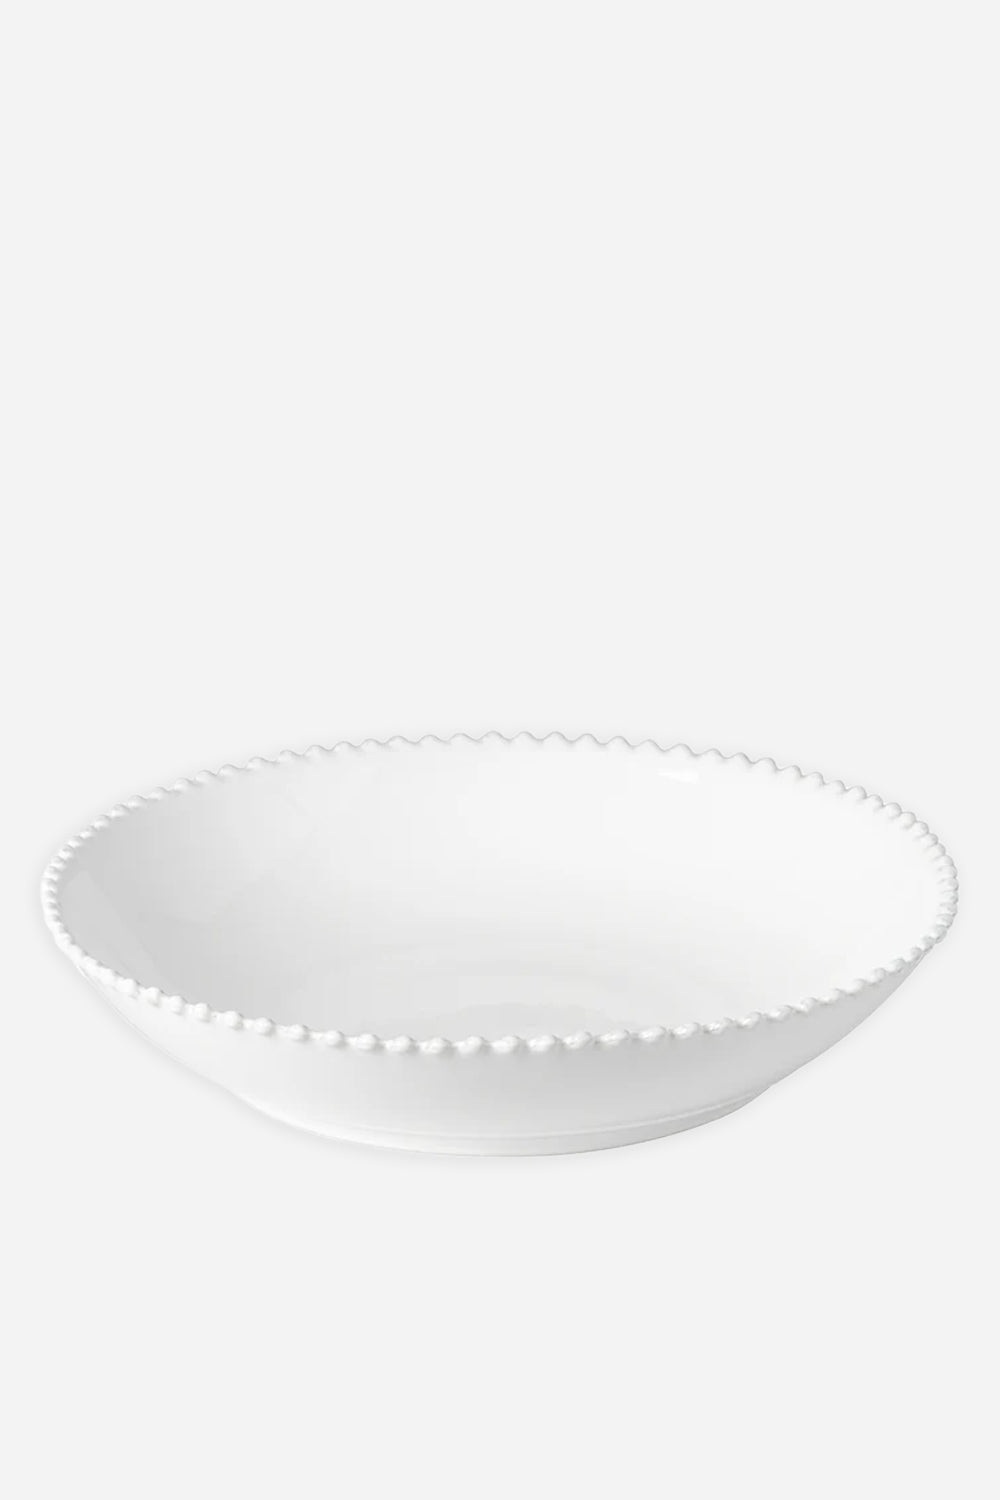 Pearl White Pasta /Serving Bowl 34cm